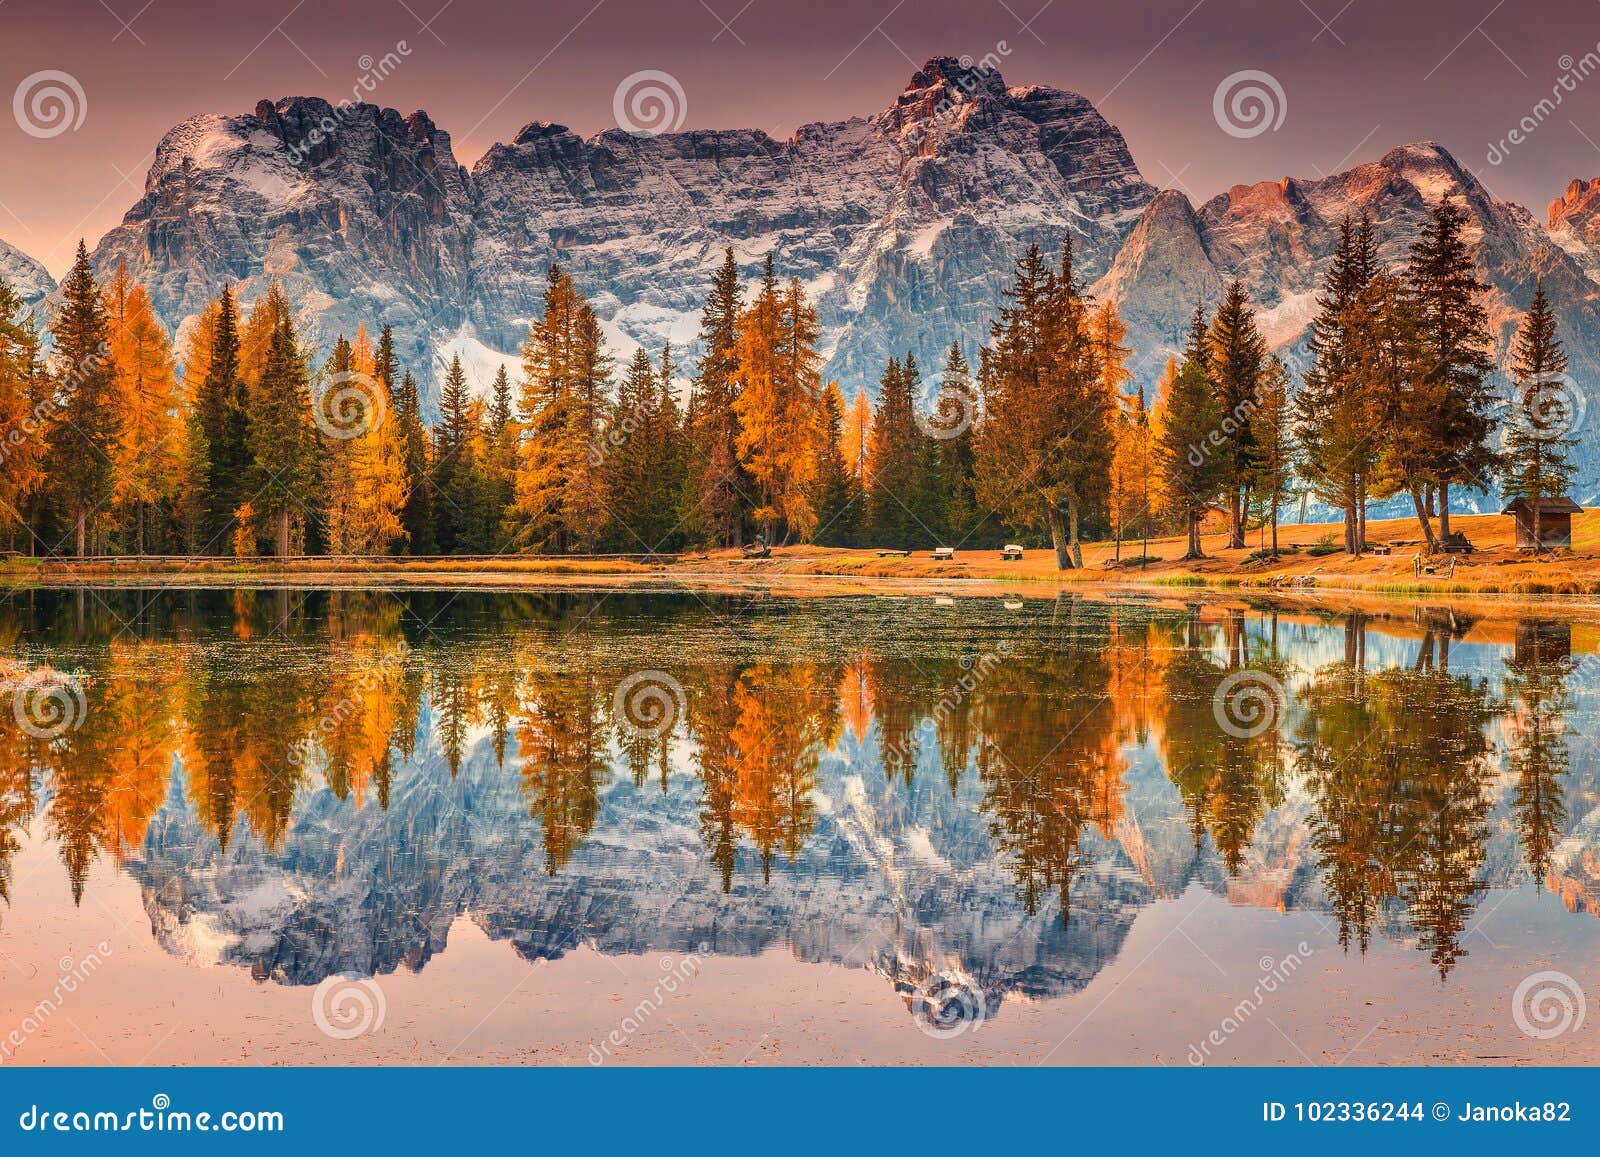 magical alpine lake in dolomites mountains, antorno lake, italy, europe